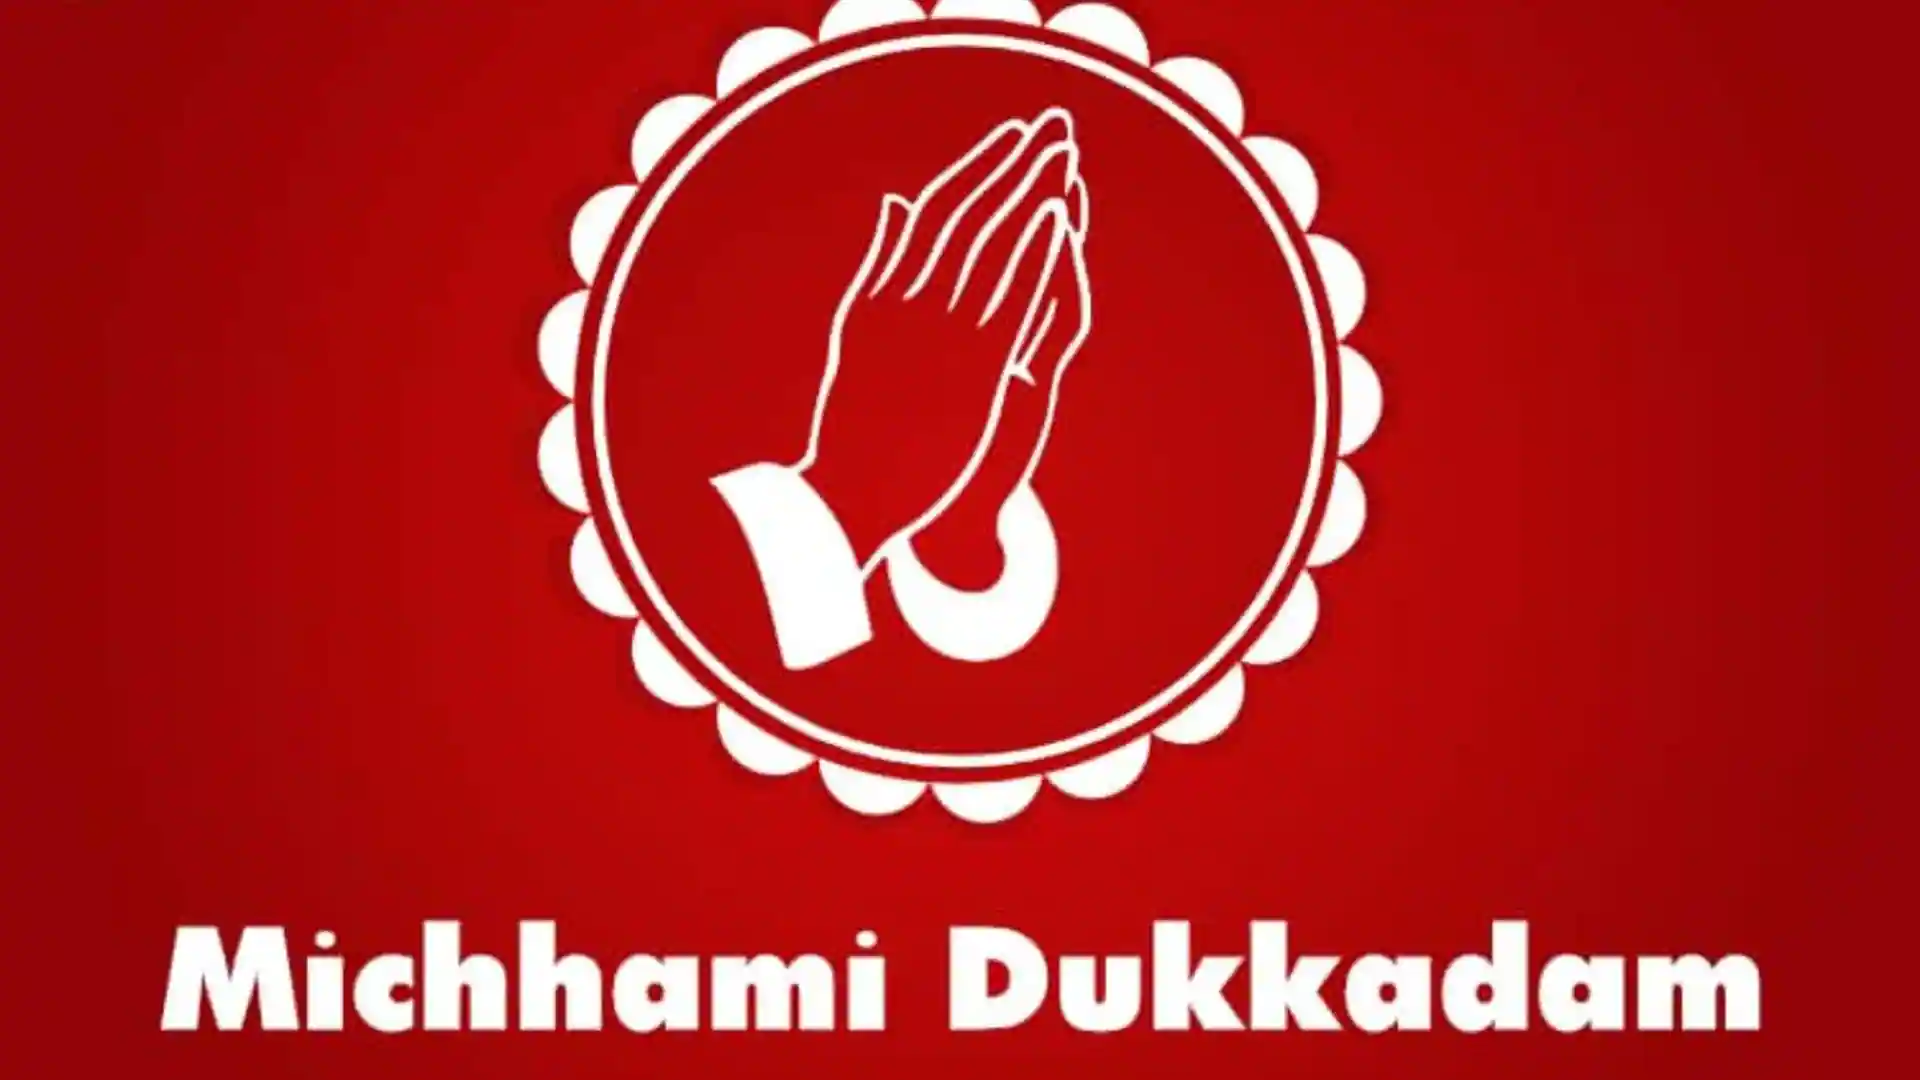 मिच्छामी दुक्कड़म/ उत्तम क्षमा का हिन्दी अर्थ, Micchami Dukkadam/Uttam Kshama Meaning